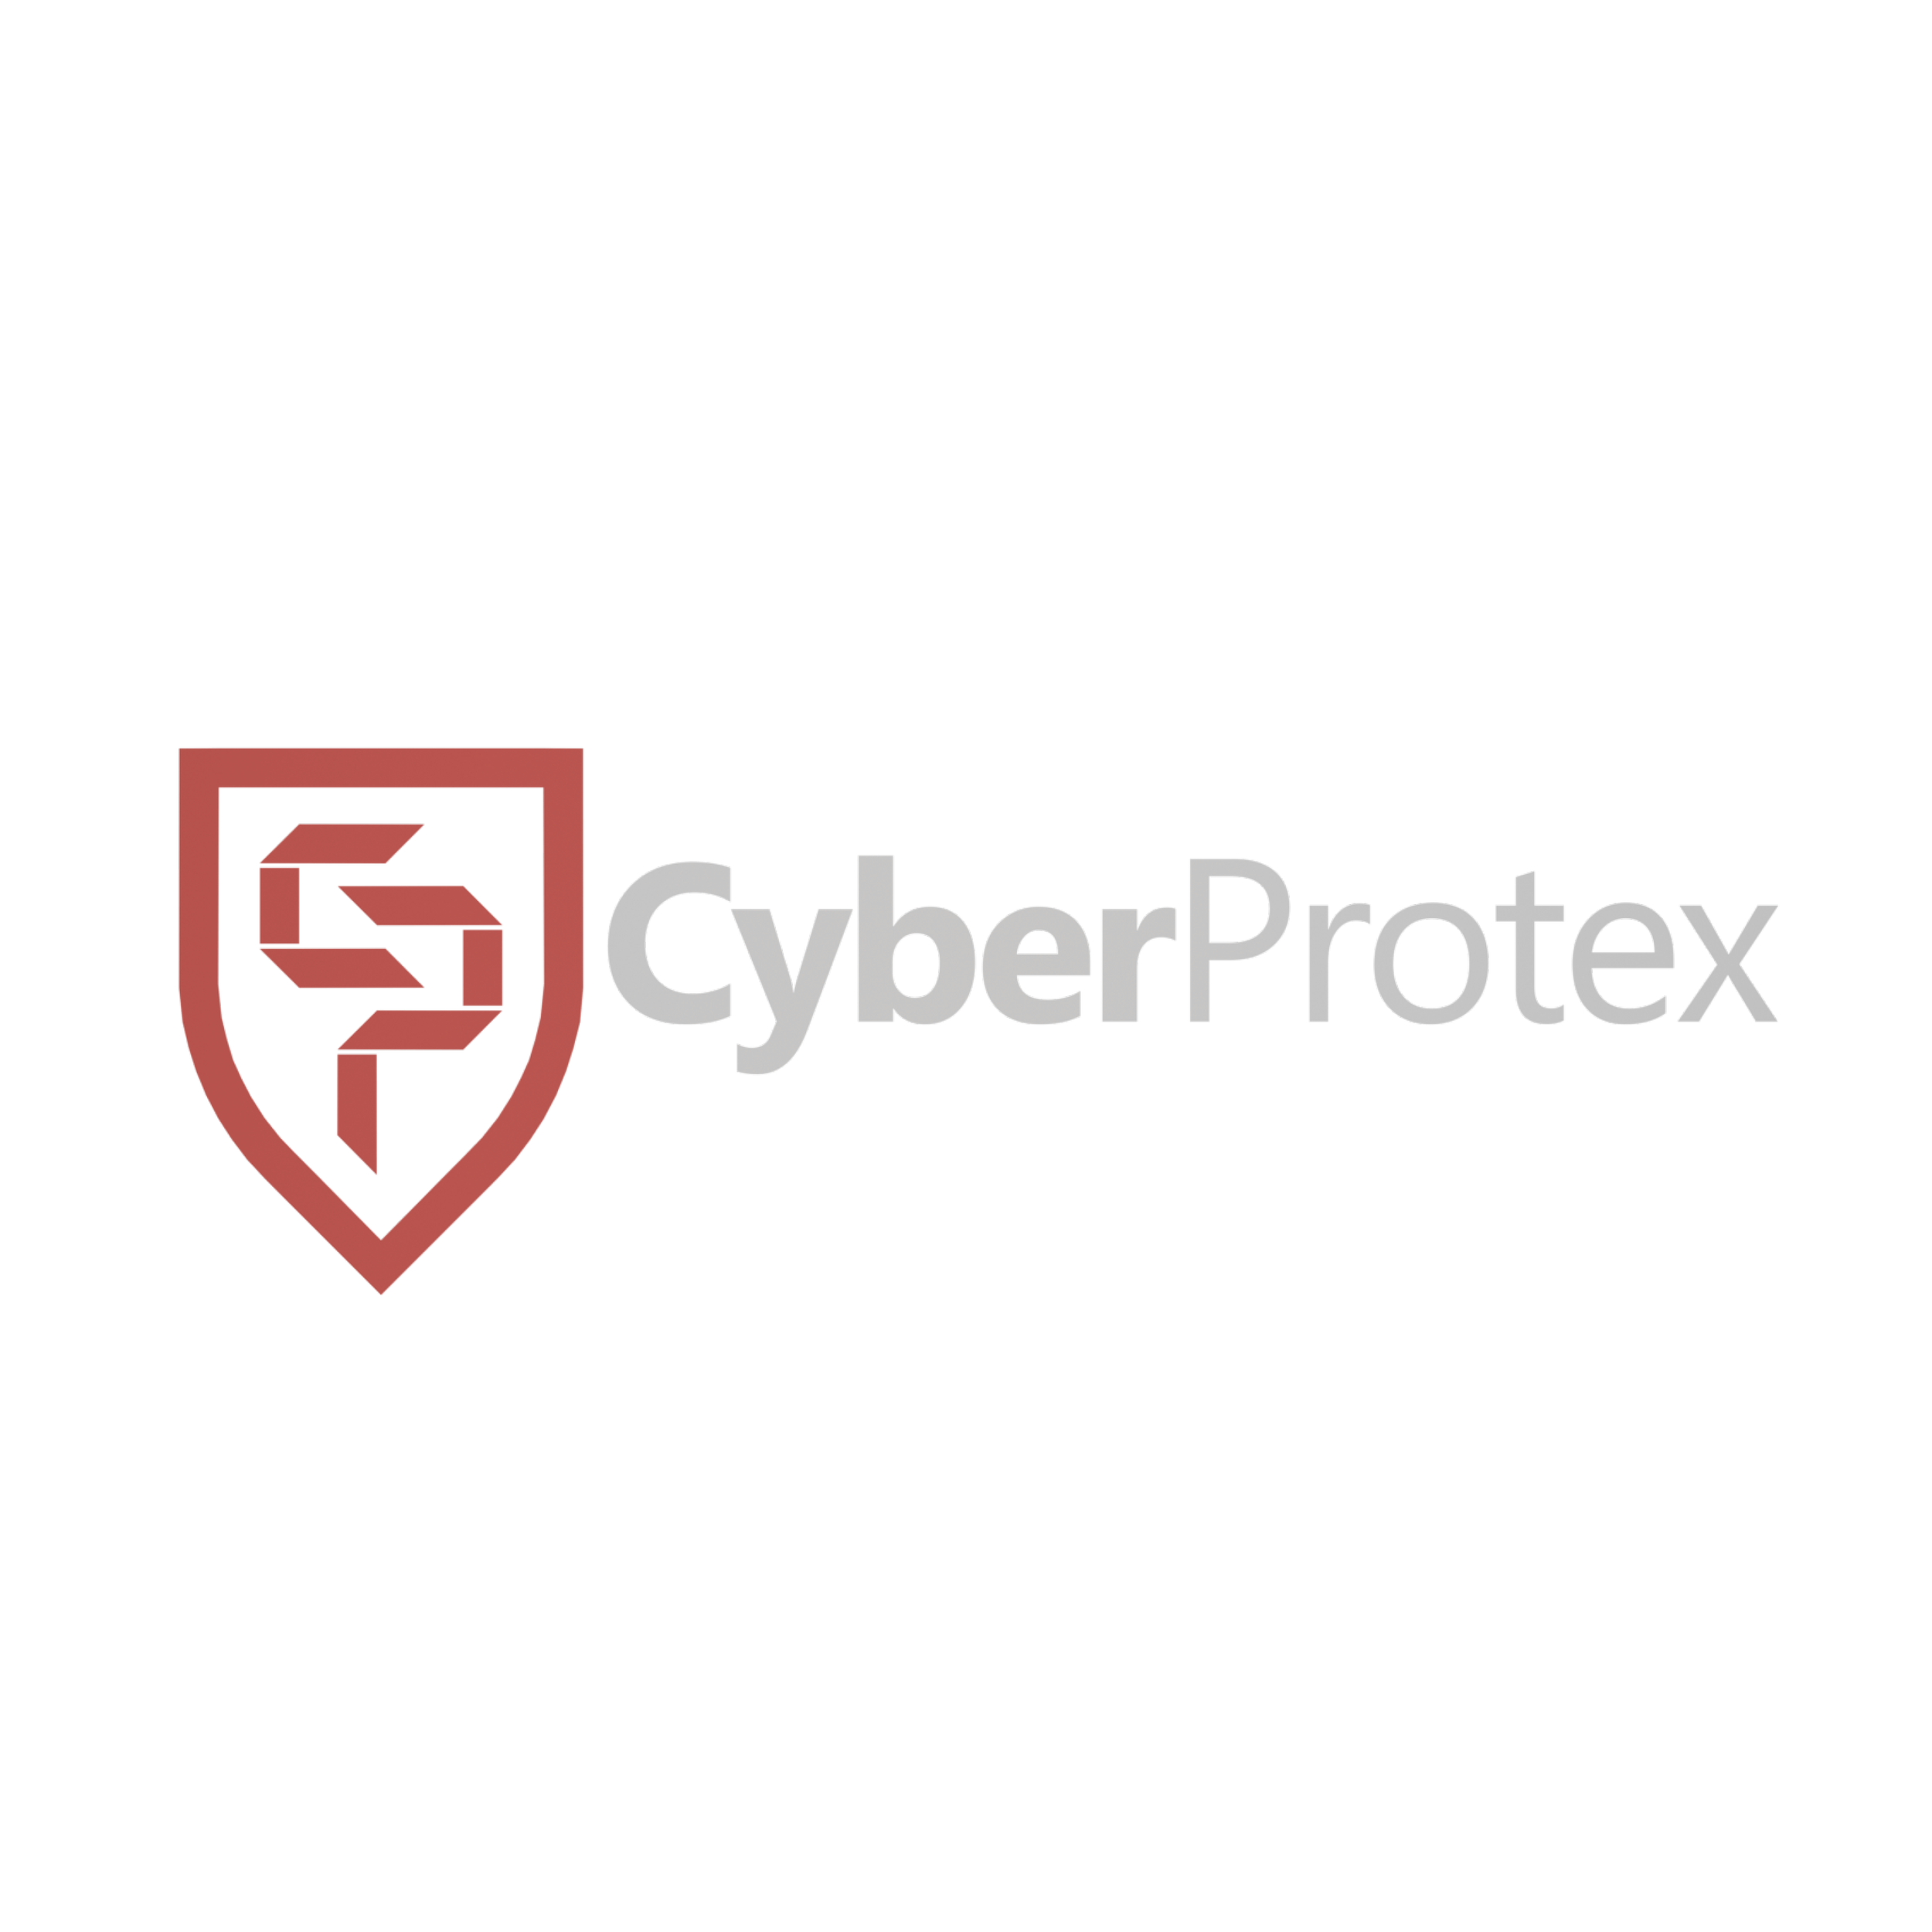 Cyber Protex